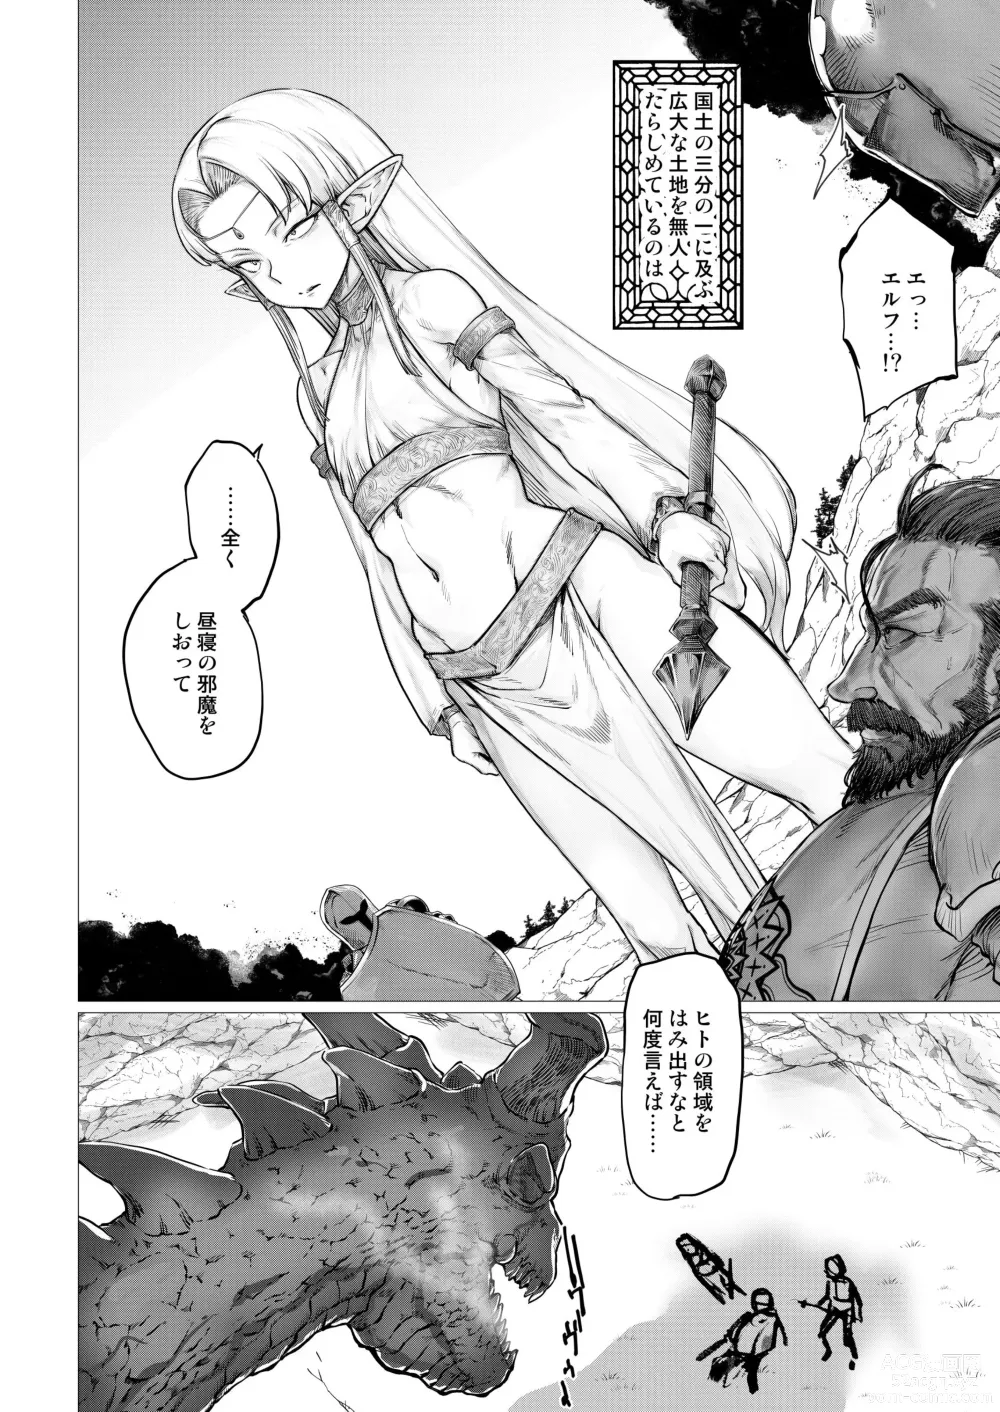 Page 3 of doujinshi Shikorufu